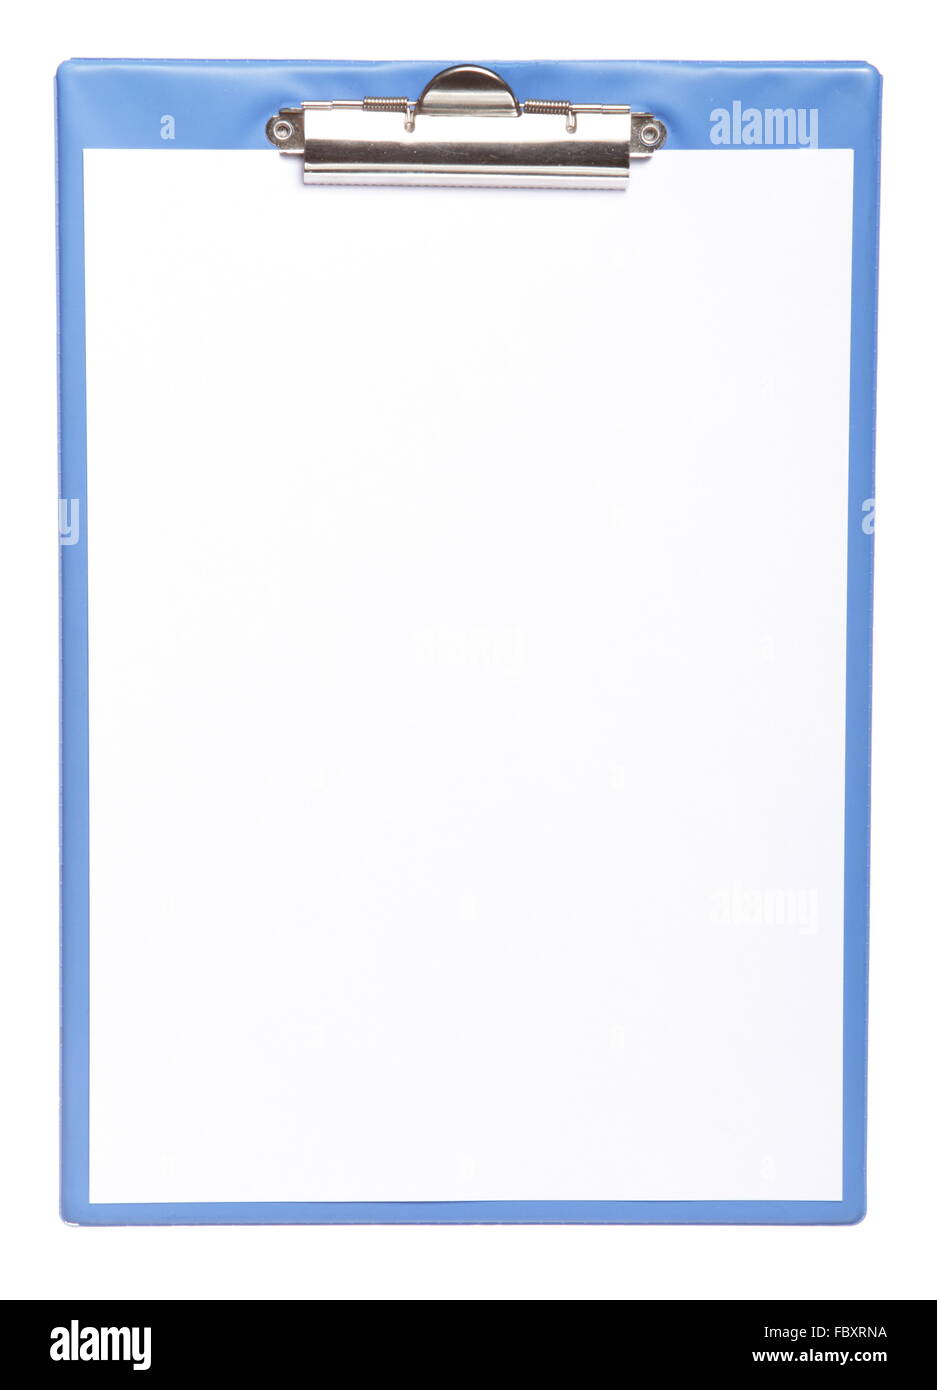 Portapapeles azul con papel en blanco aislado en blanco Foto de stock